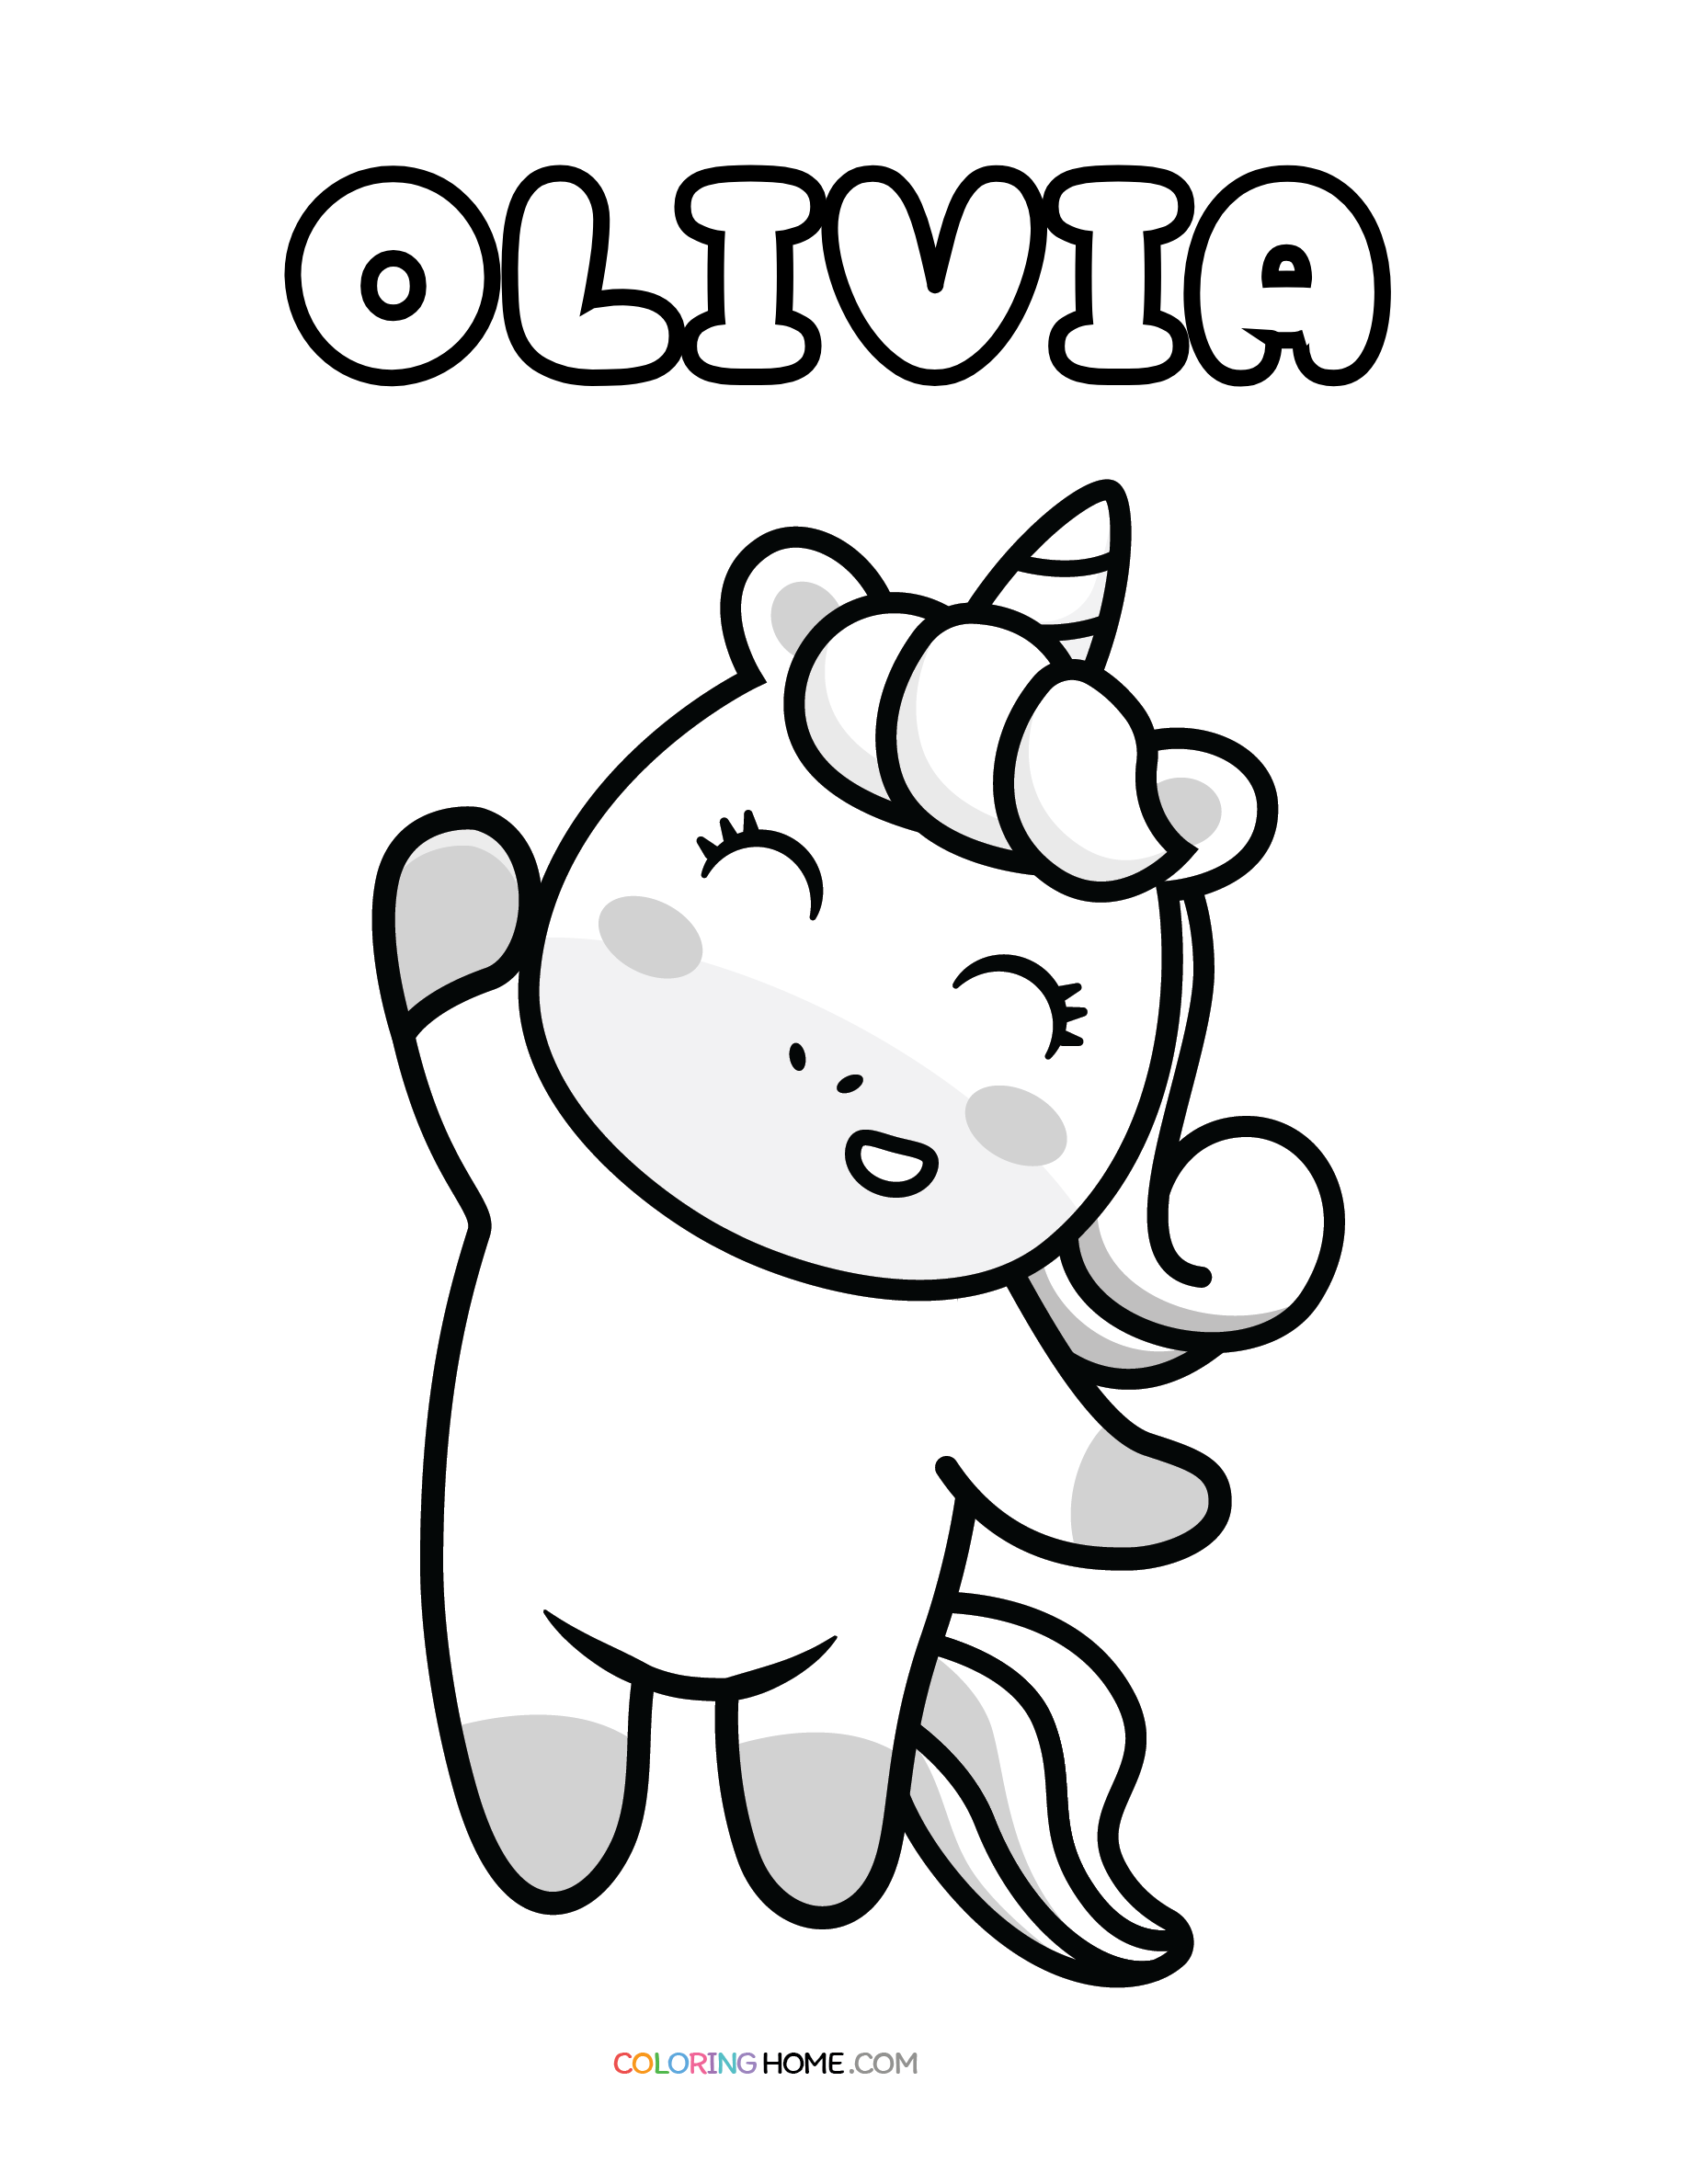 Olivia unicorn coloring page